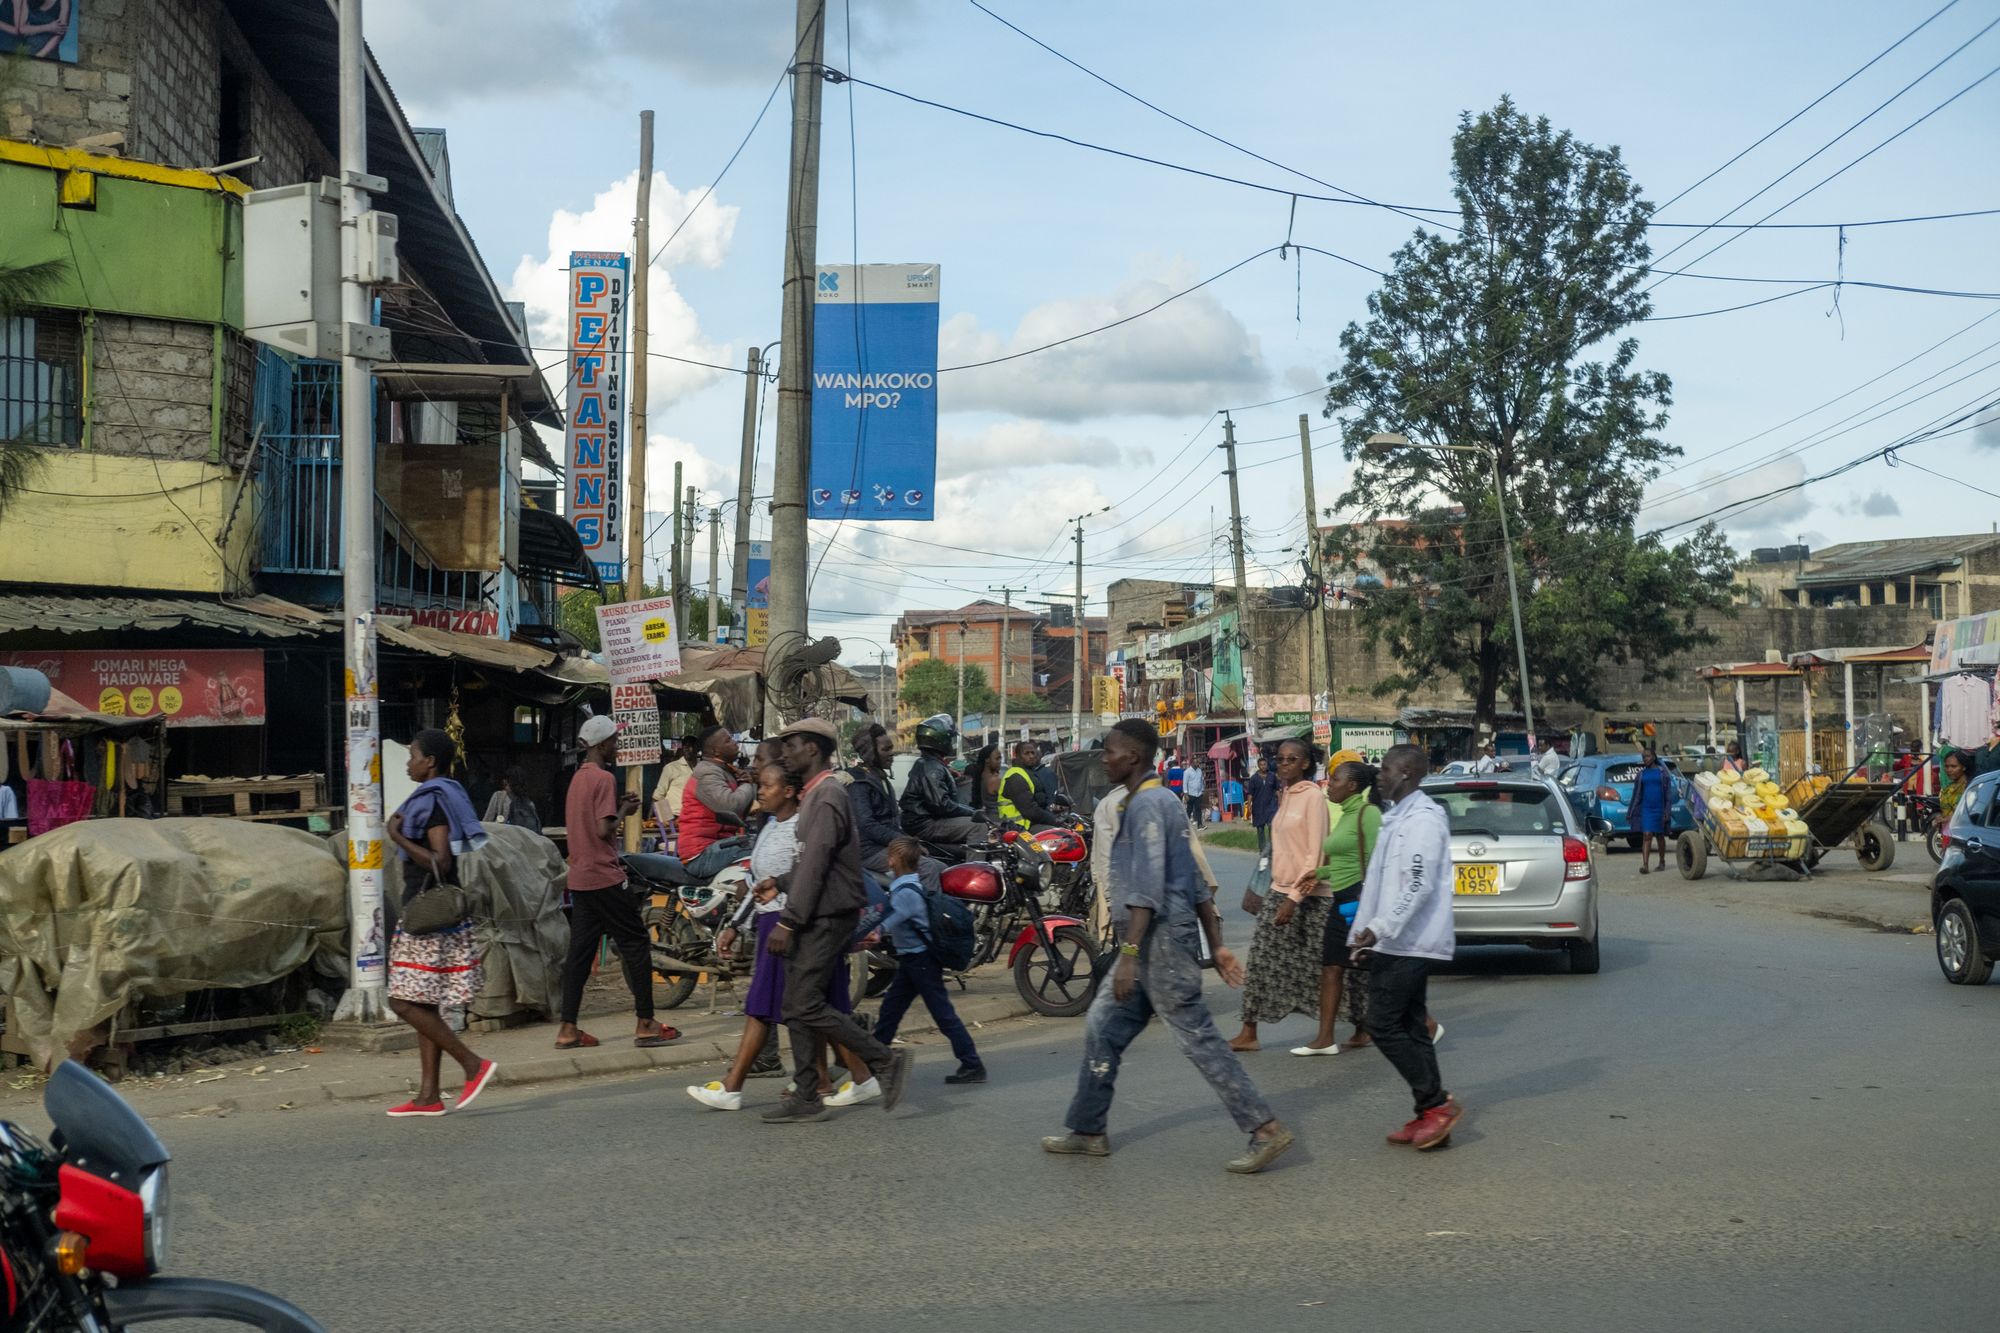 A busy market scene in Nairobi, Kenya